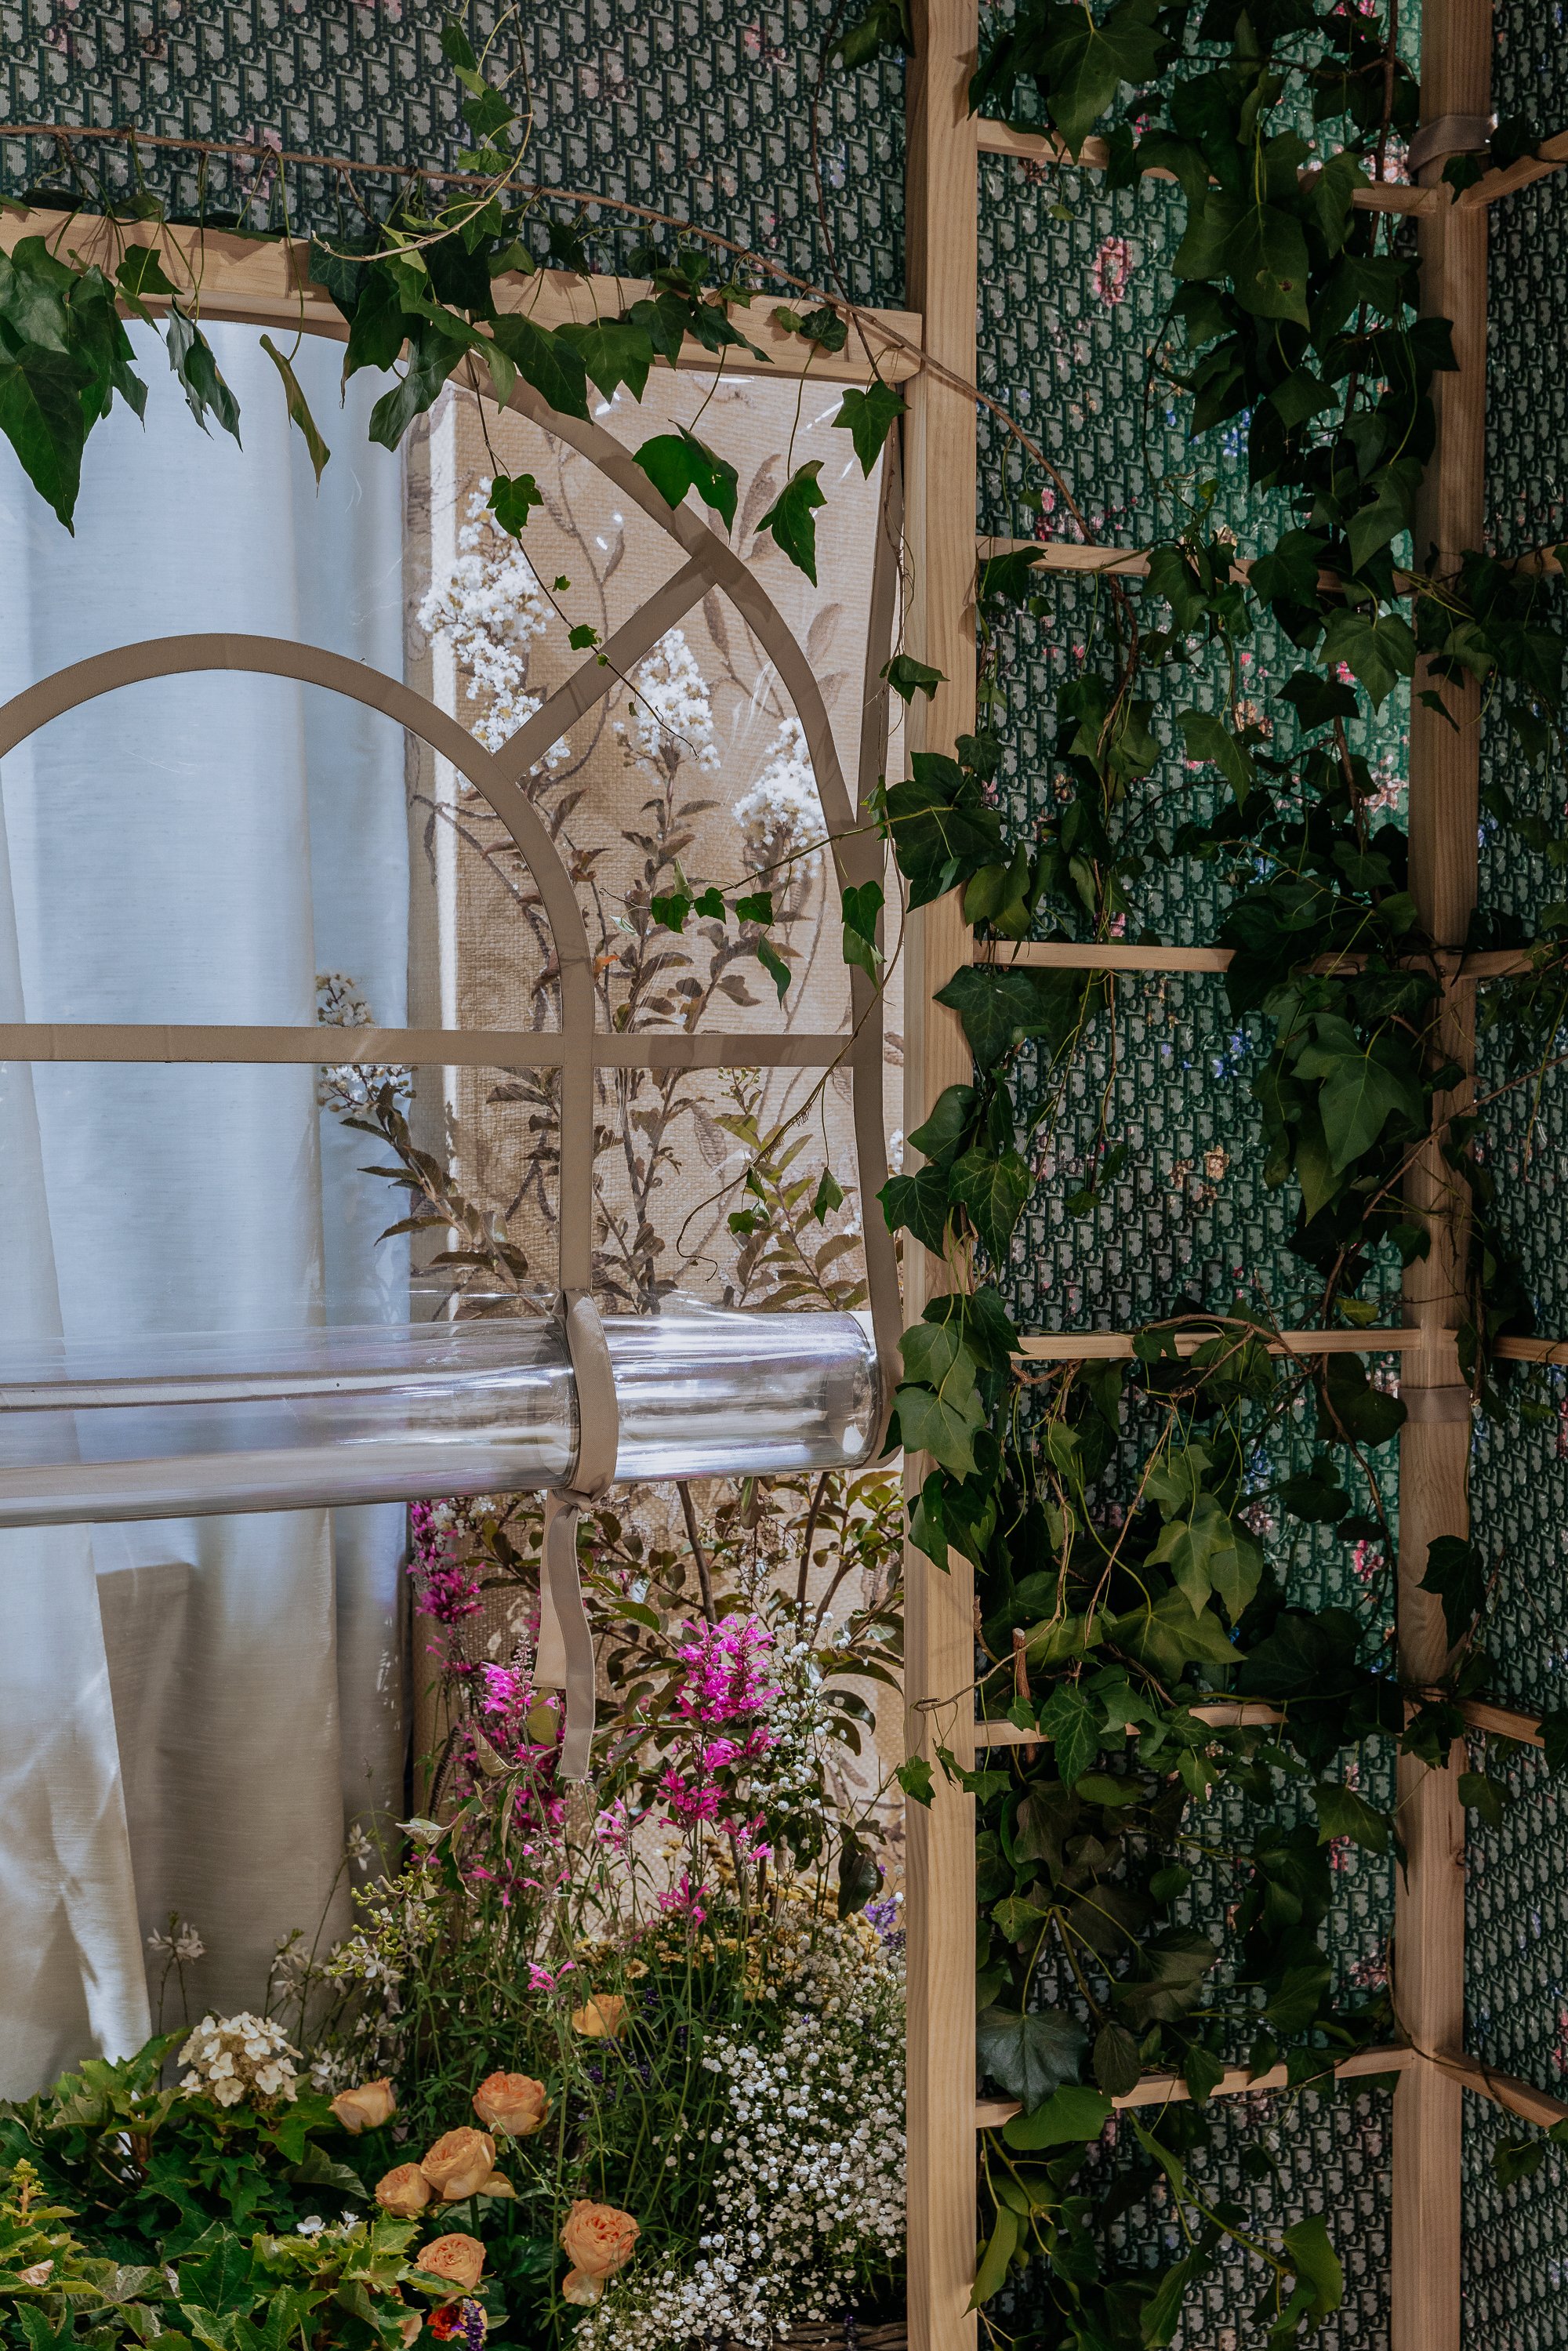 Close-up of Dior Pergola with the Bespoke planting design peeking through